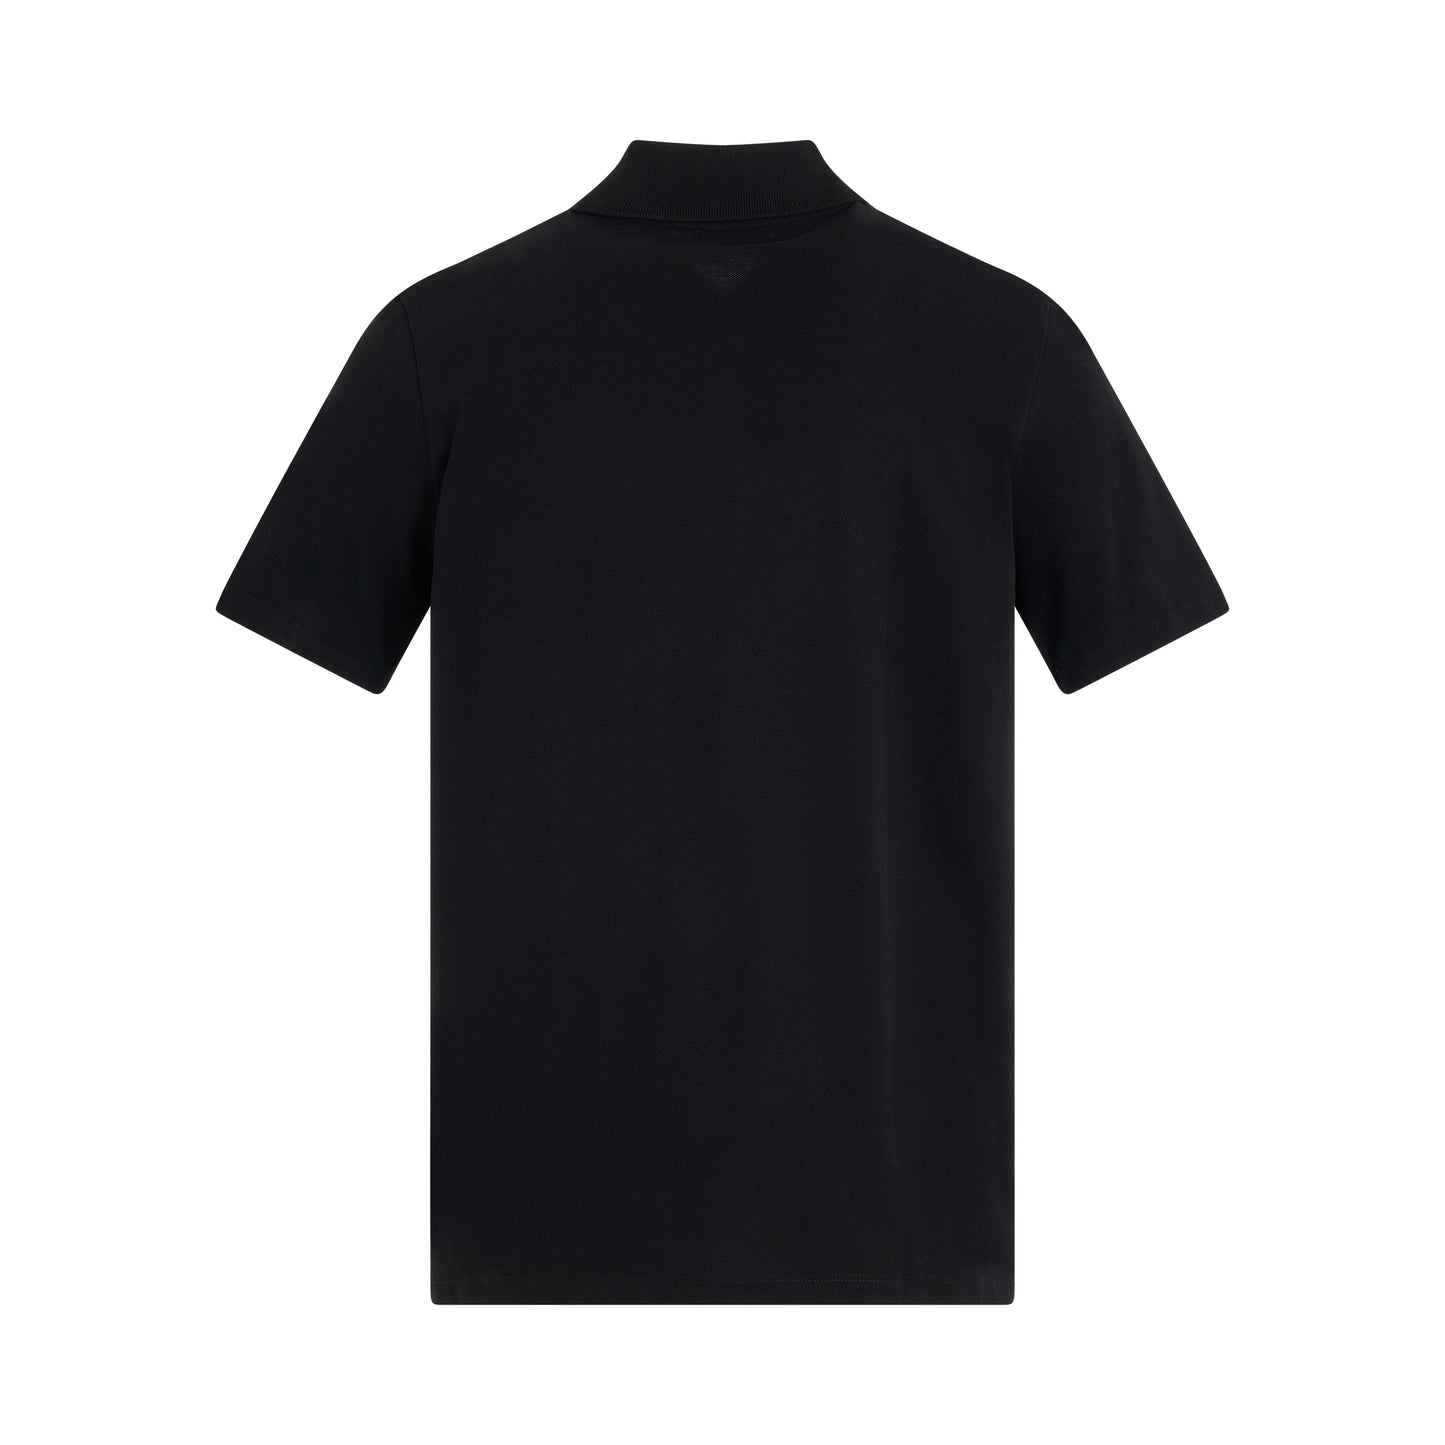 Balmain Stitch Collar Polo in Black/White